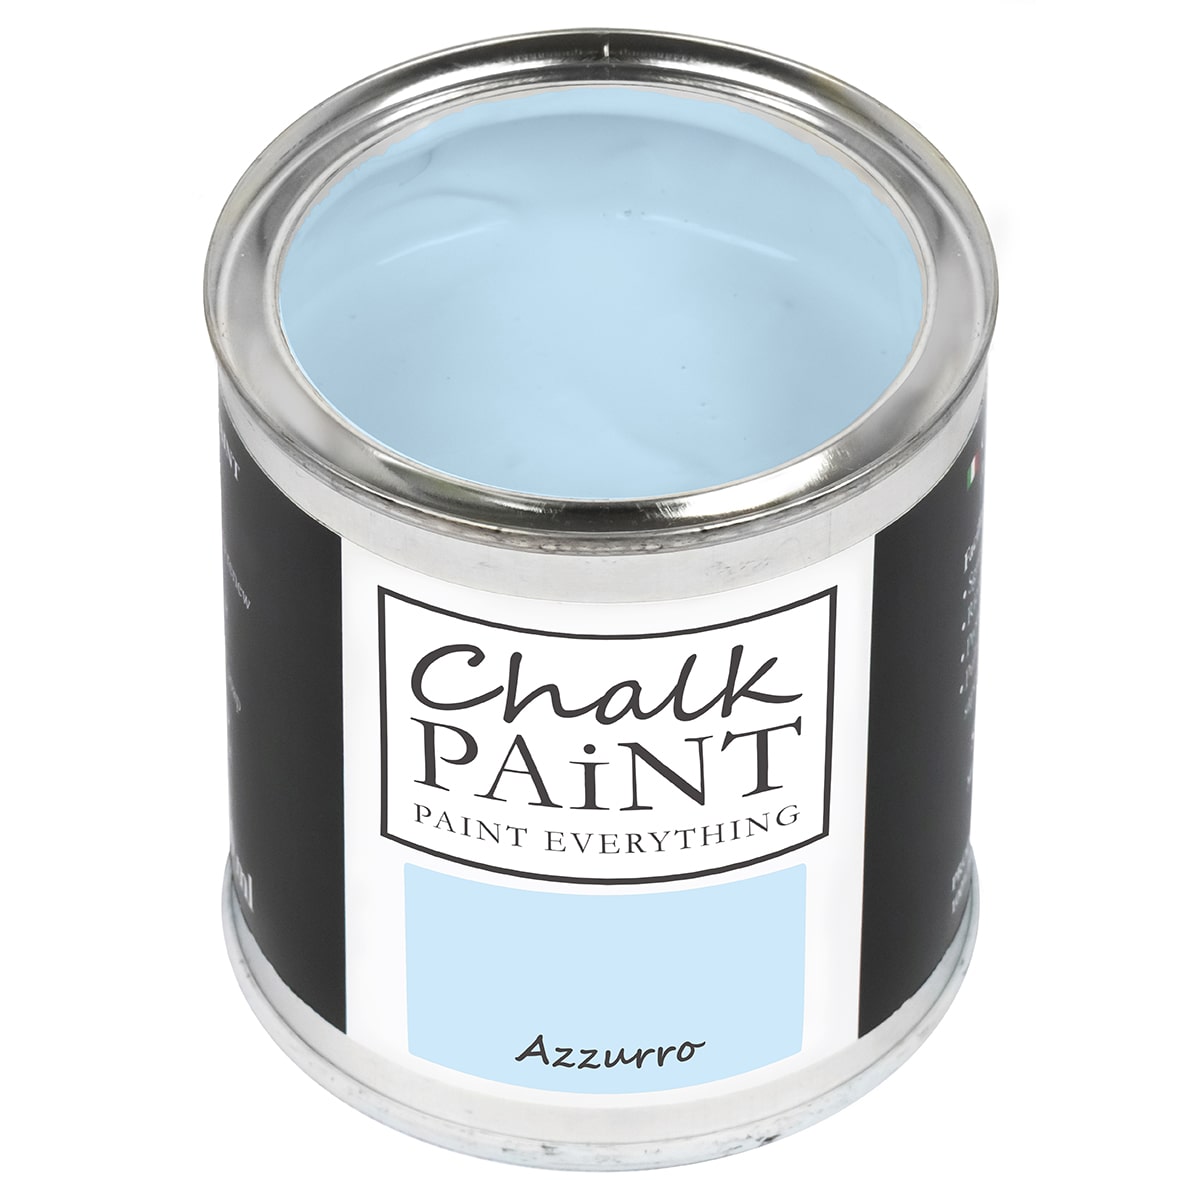 Chalk paint Azzurro